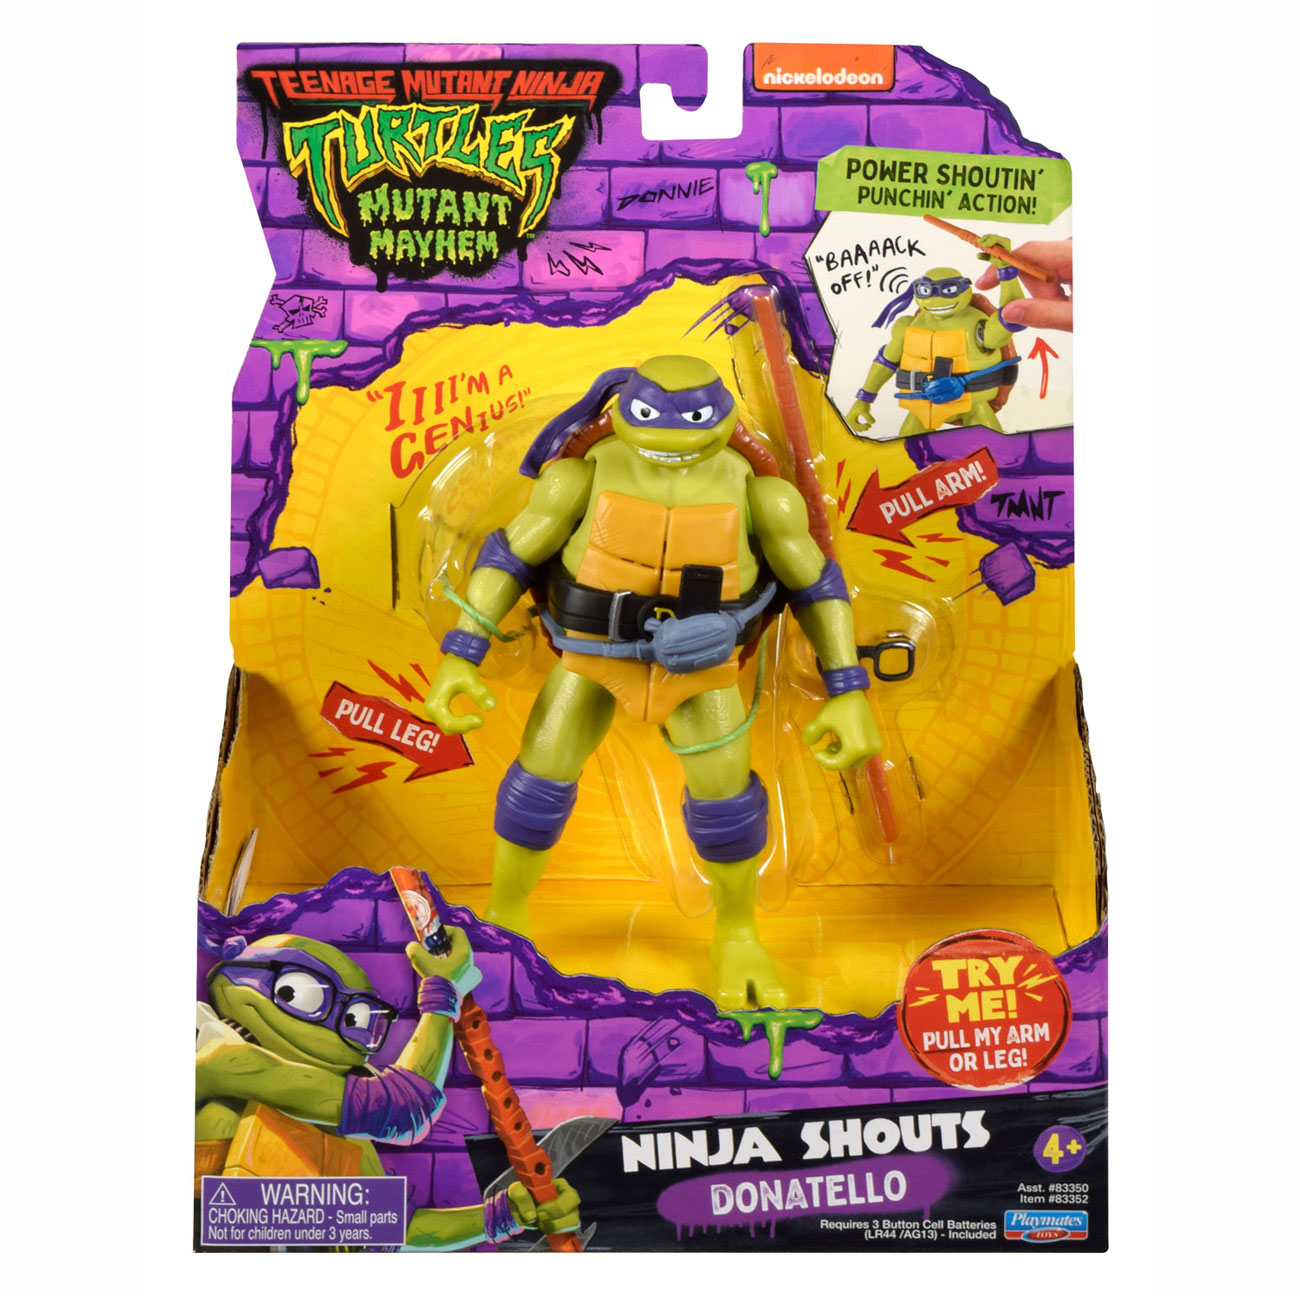 Teenage Mutant Ninja Turtles Ninja Shouts Figure - Donatello